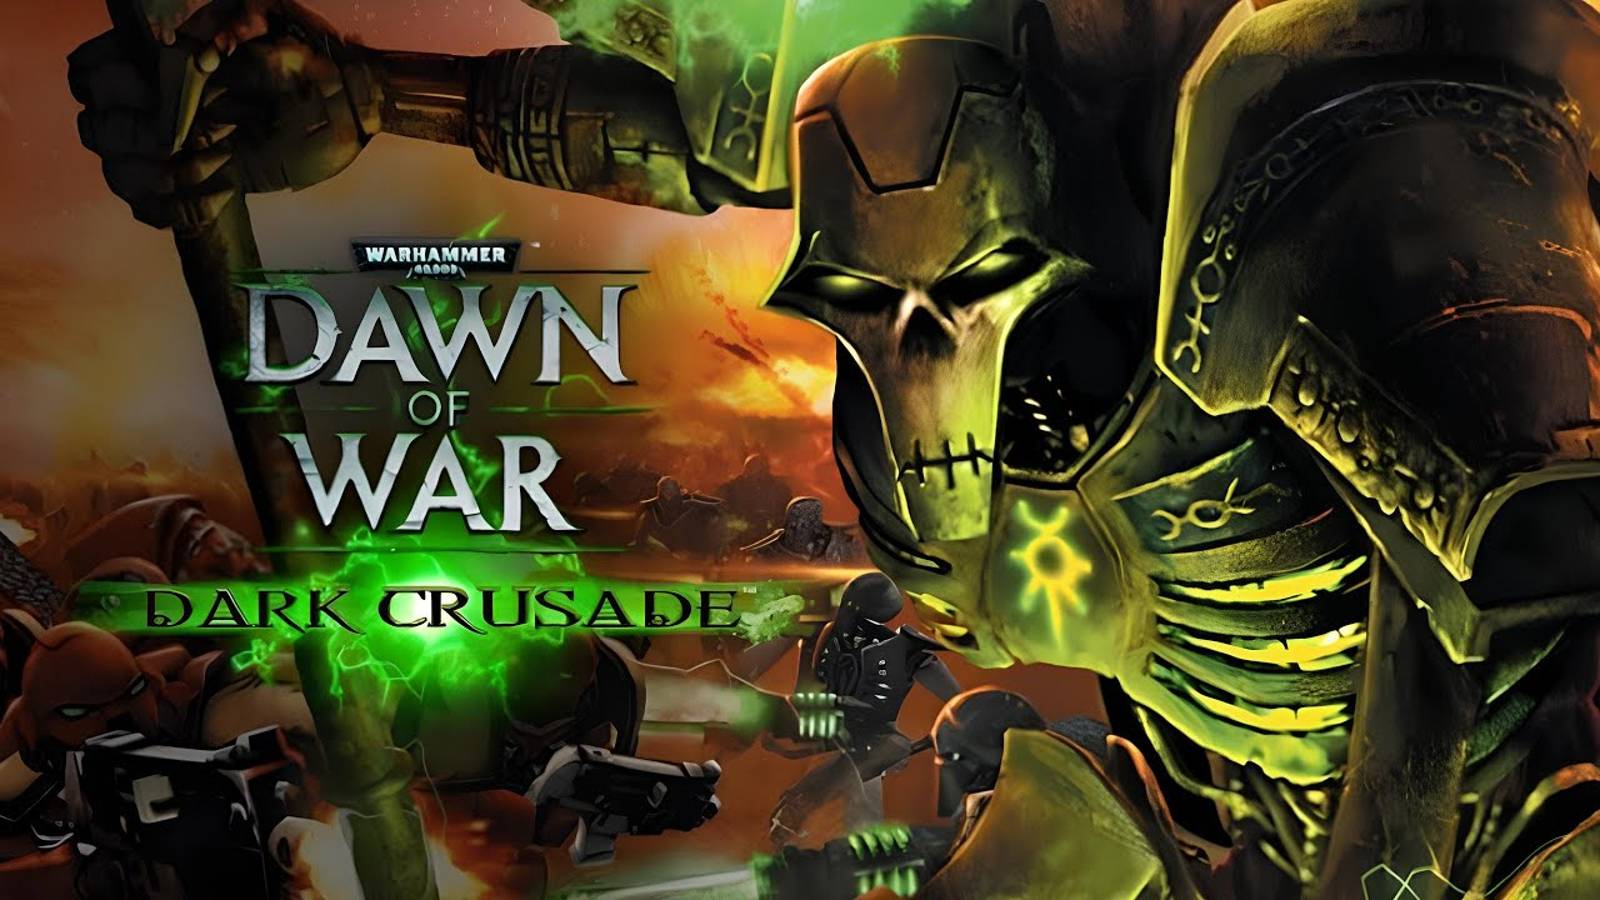 Warhammer 40,000 Dawn of War - Dark Crusade. Тау. Орестанские равнины